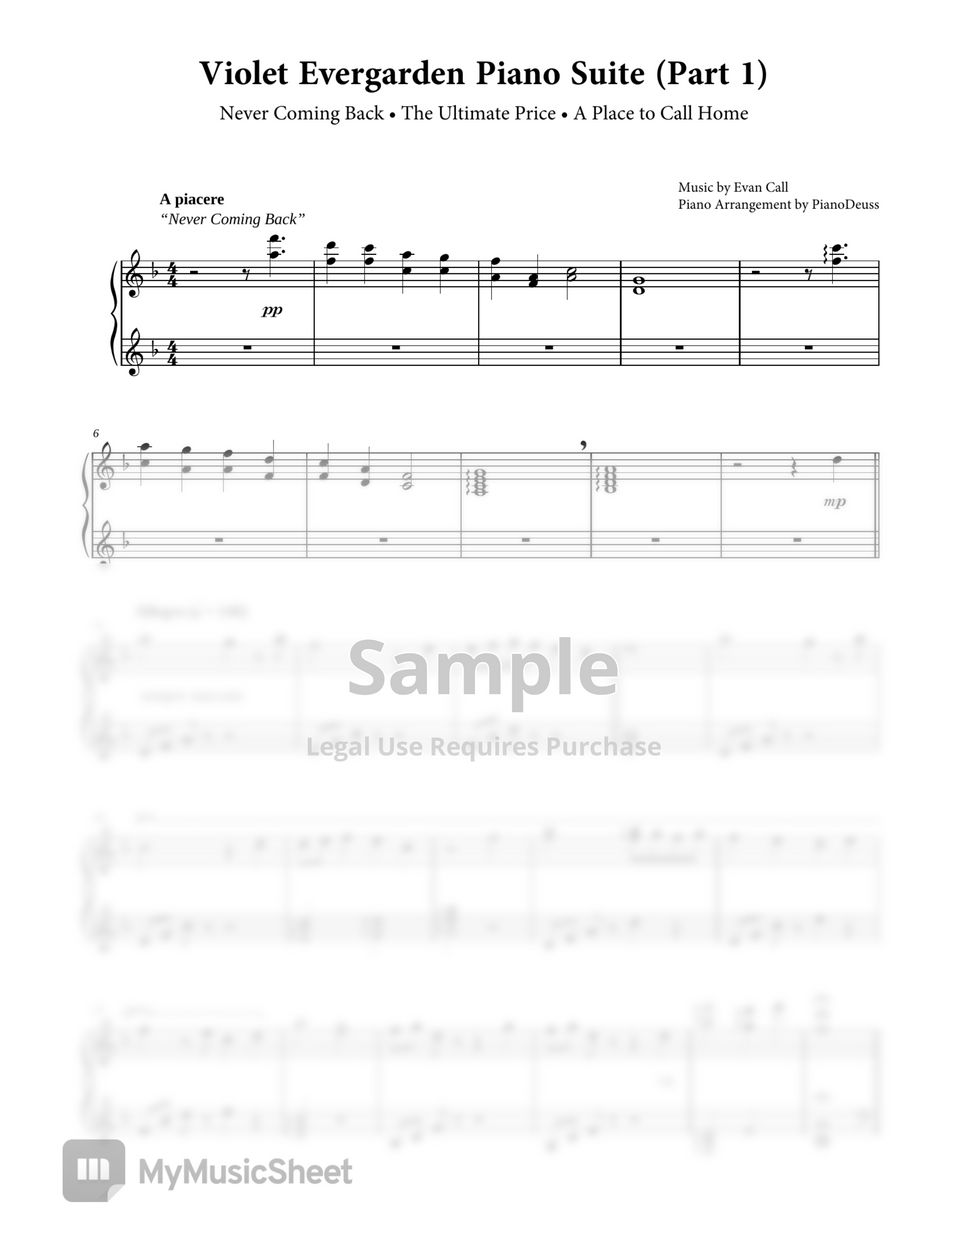 Evan Call - Violet Evergarden Piano Suite (Part 1) by PianoDeuss